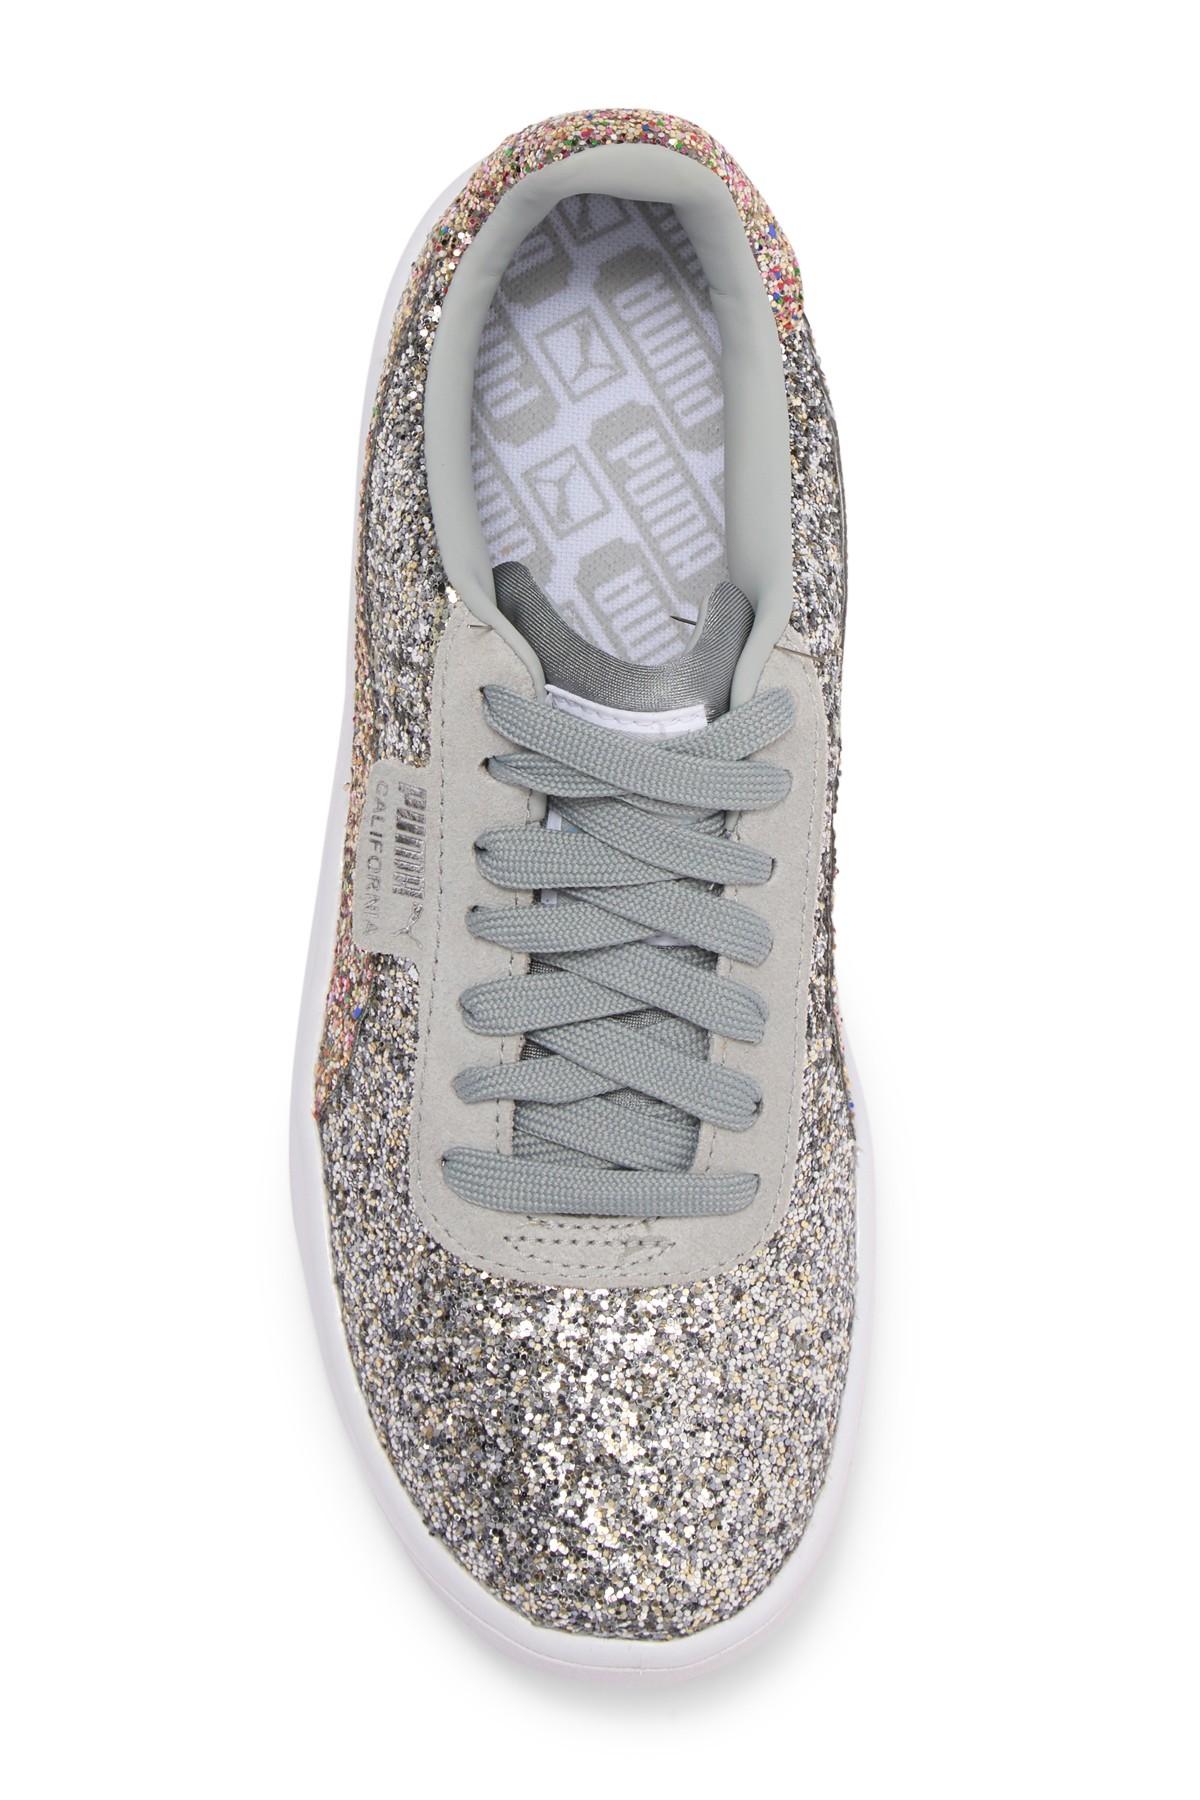 PUMA Leather California Glitz Glitter Sneaker in Gray (Metallic) | Lyst